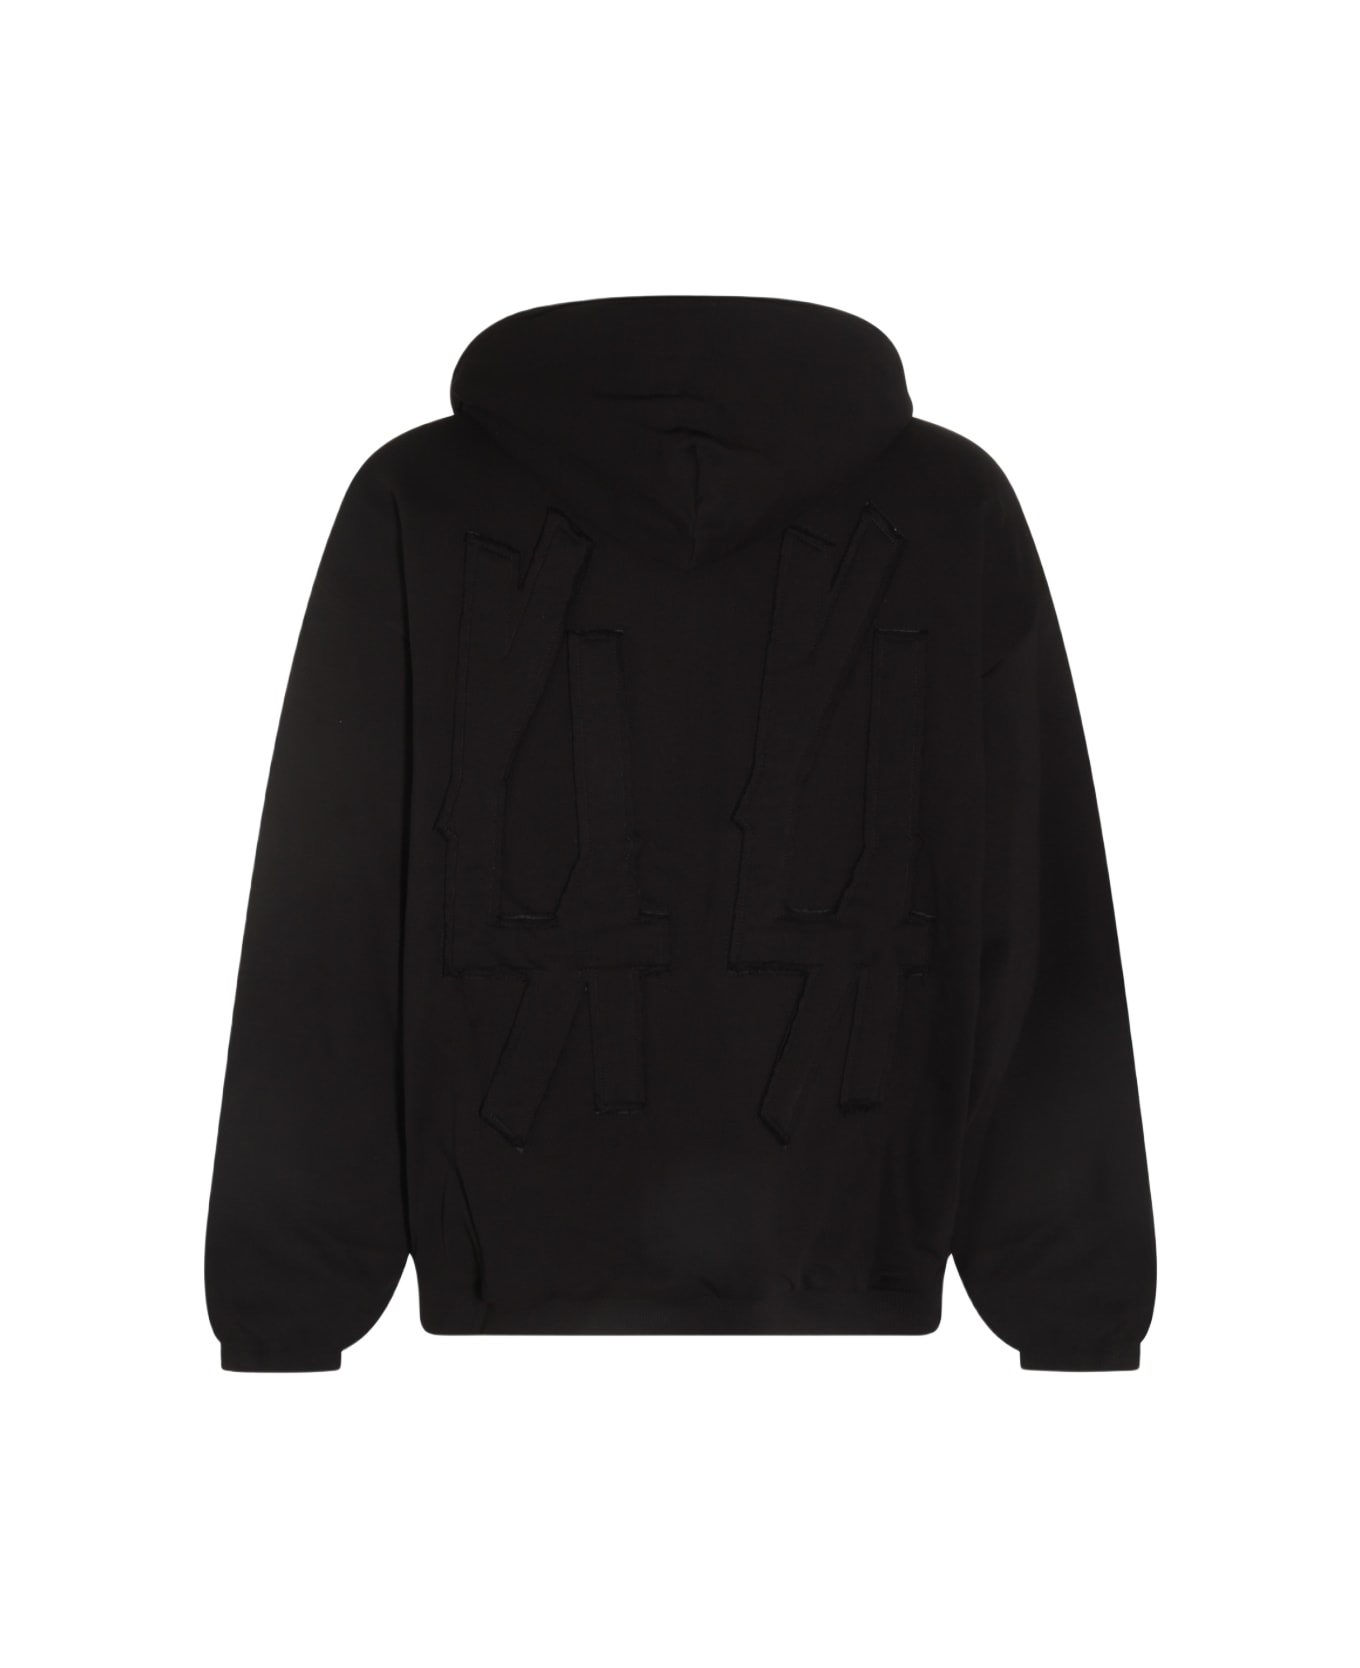 44 Label Group Black Cotton Sweatshirt - Black フリース